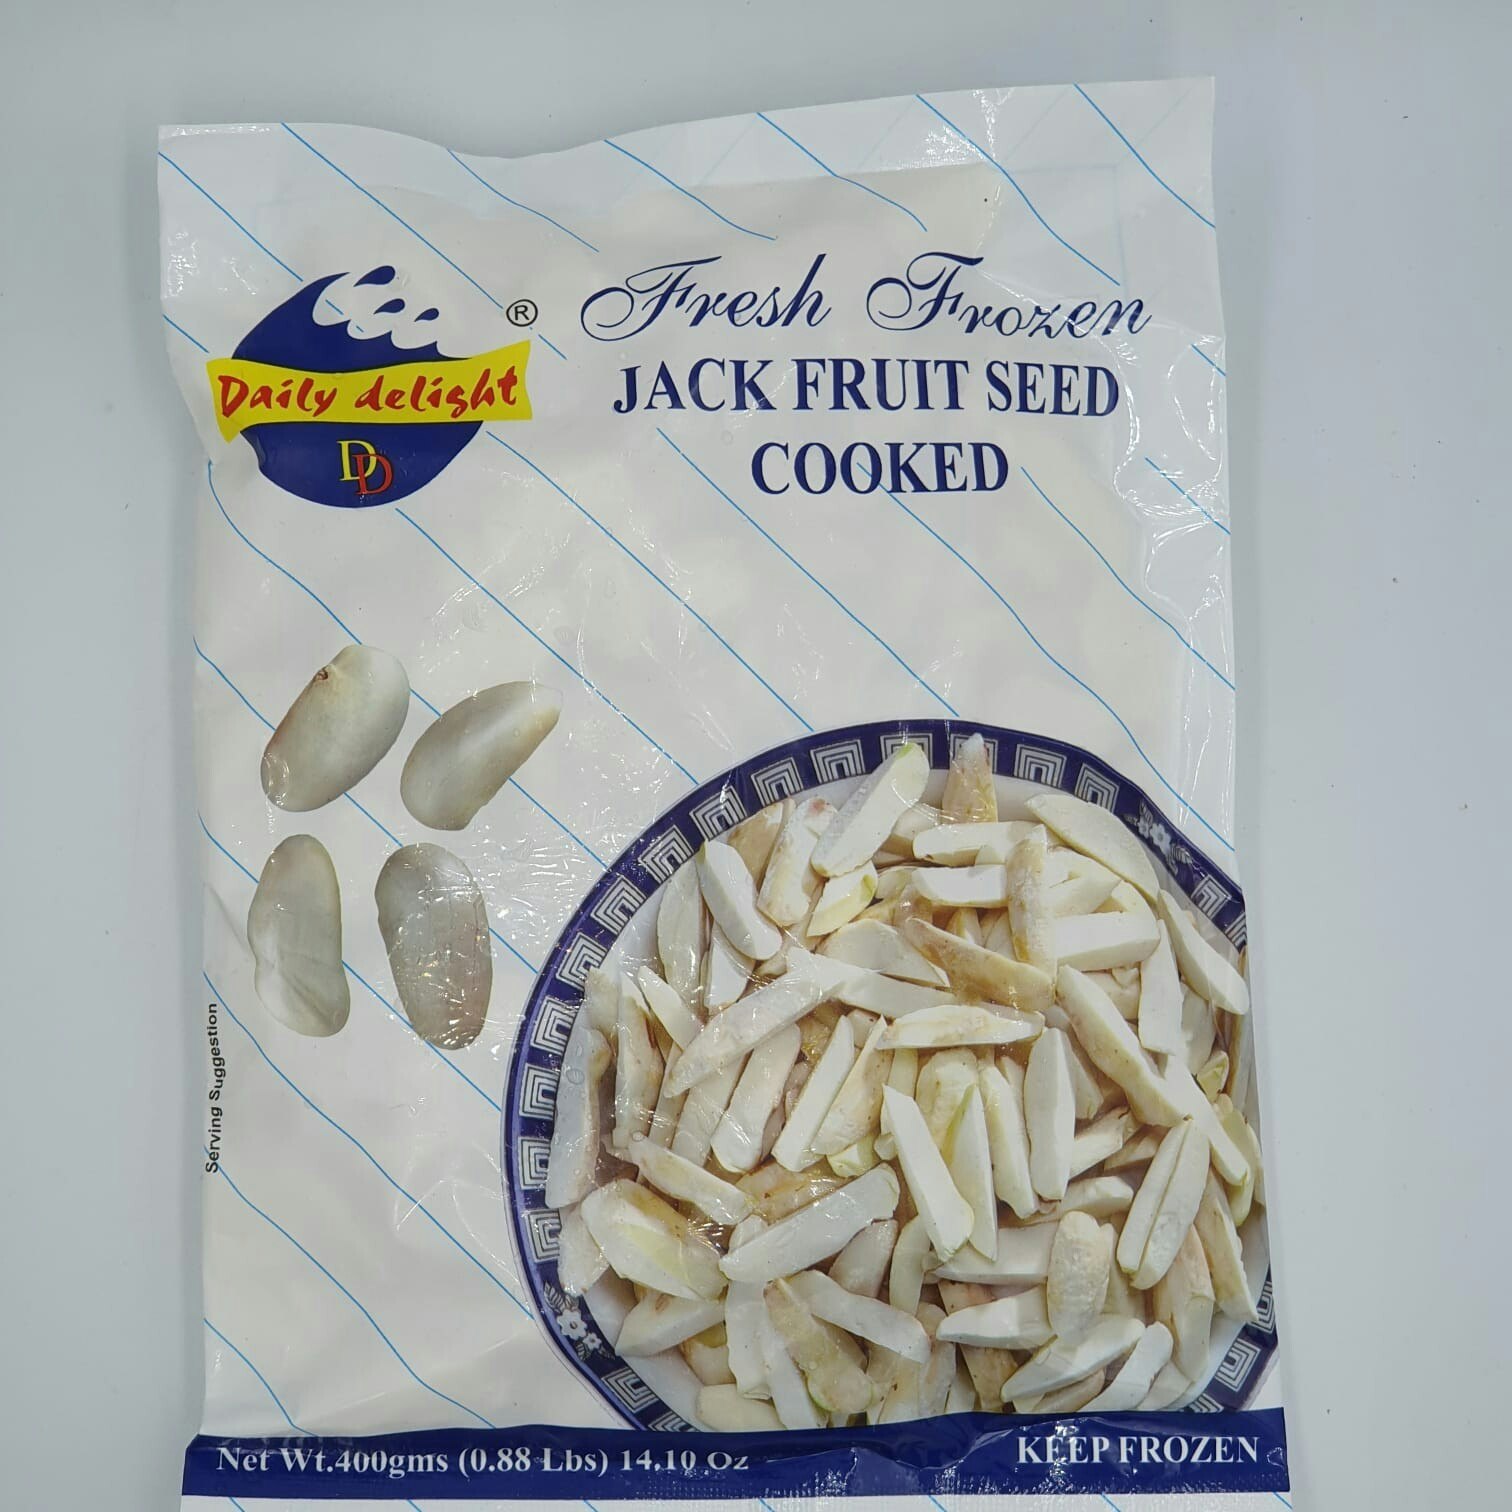 Frozen Jackfruit Seeds Cooked (Daily Delight) - 400g